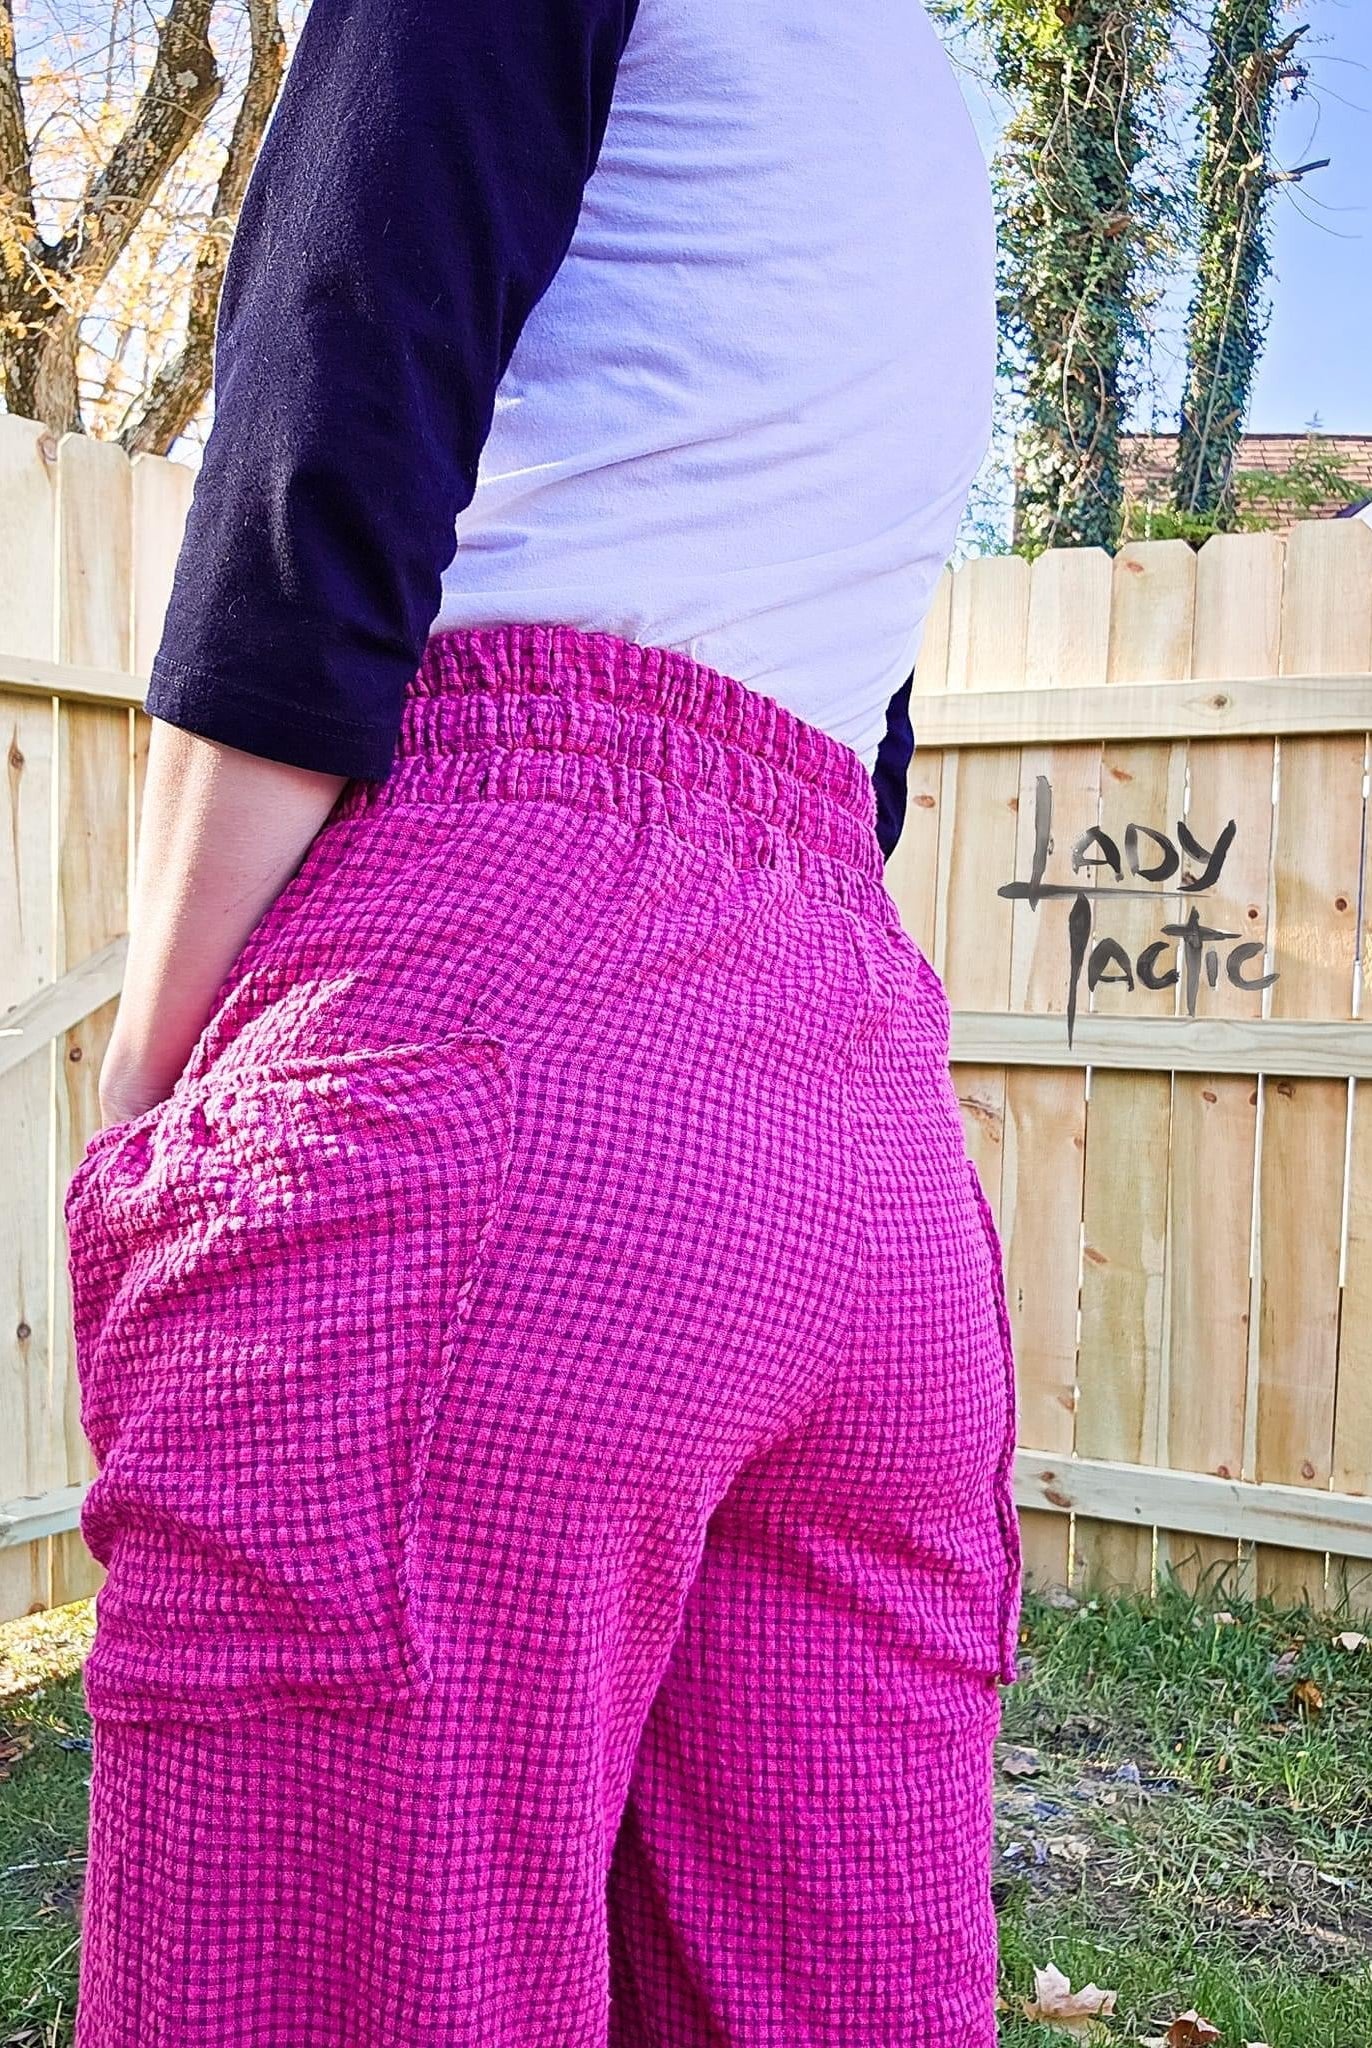 Raspberry Jam Plaid, Woven Fabric - Boho Fabrics